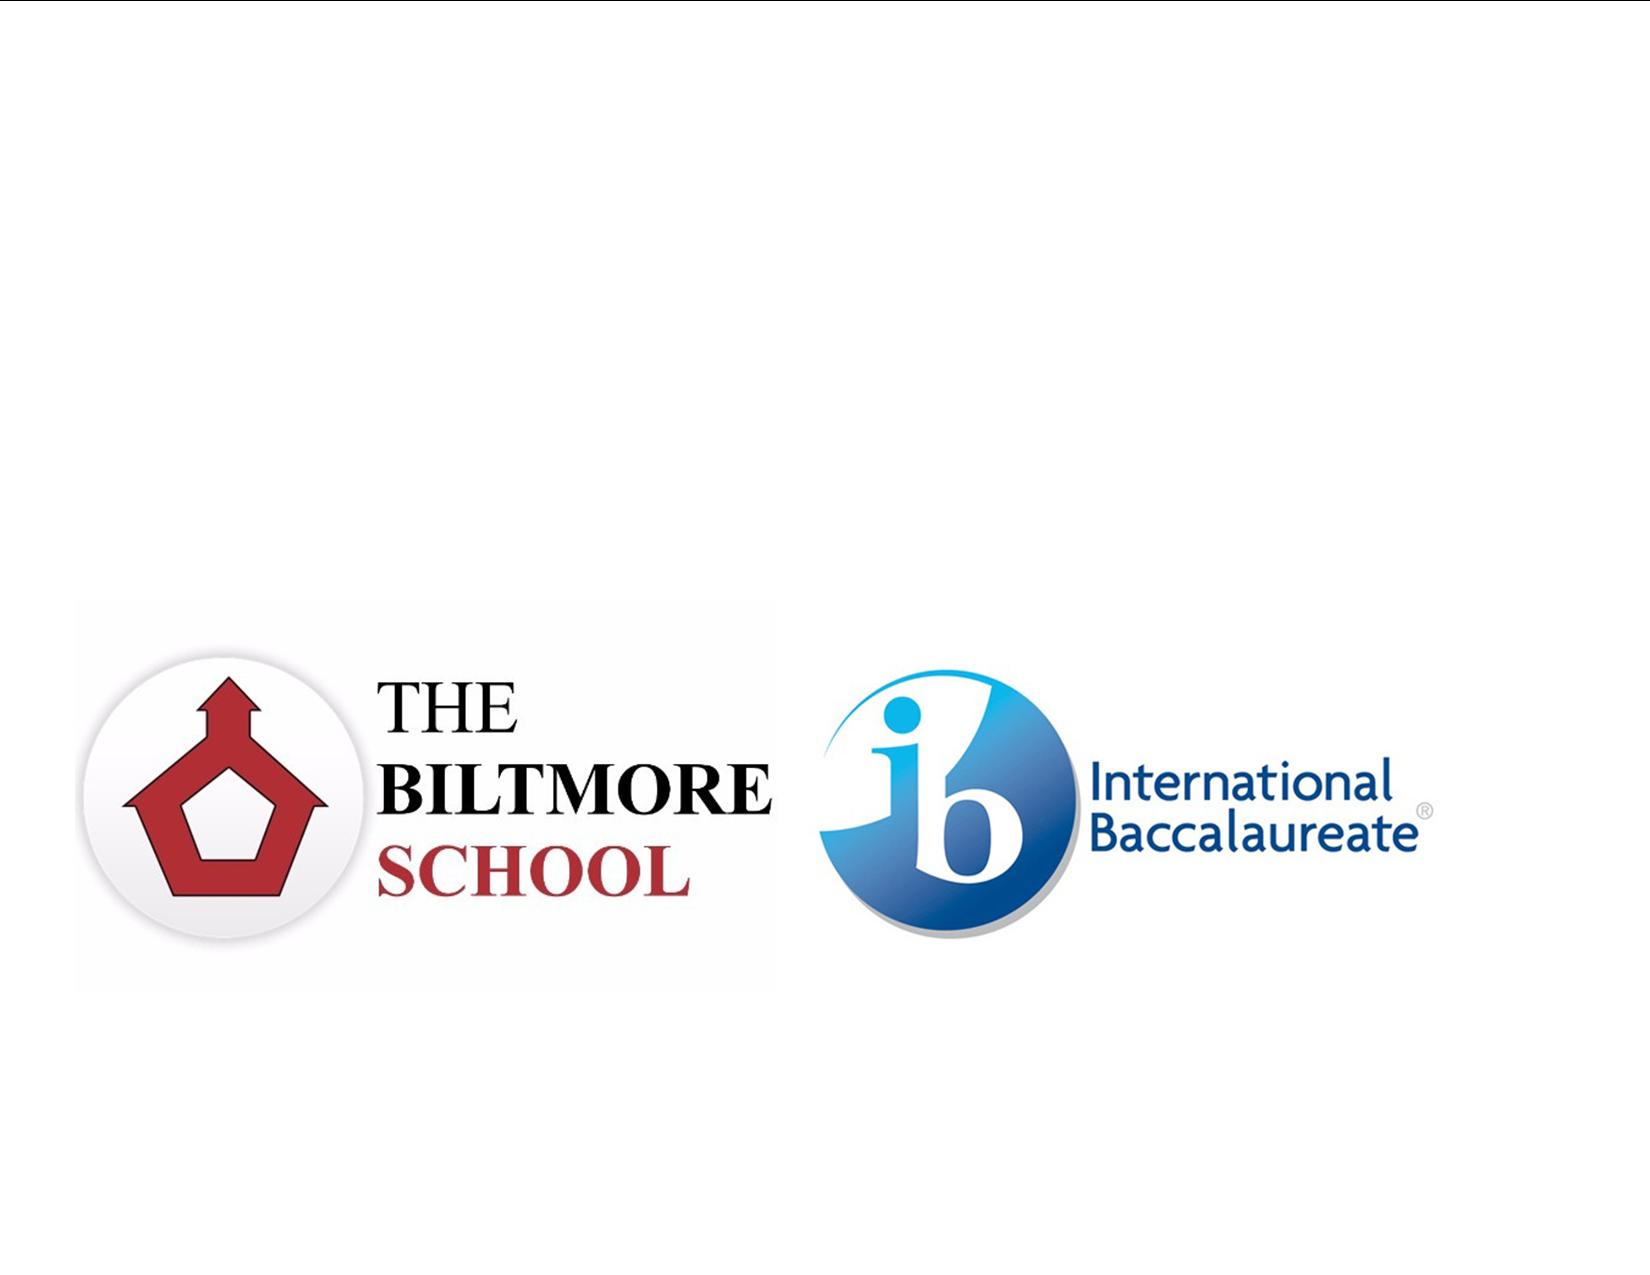 The Biltmore School